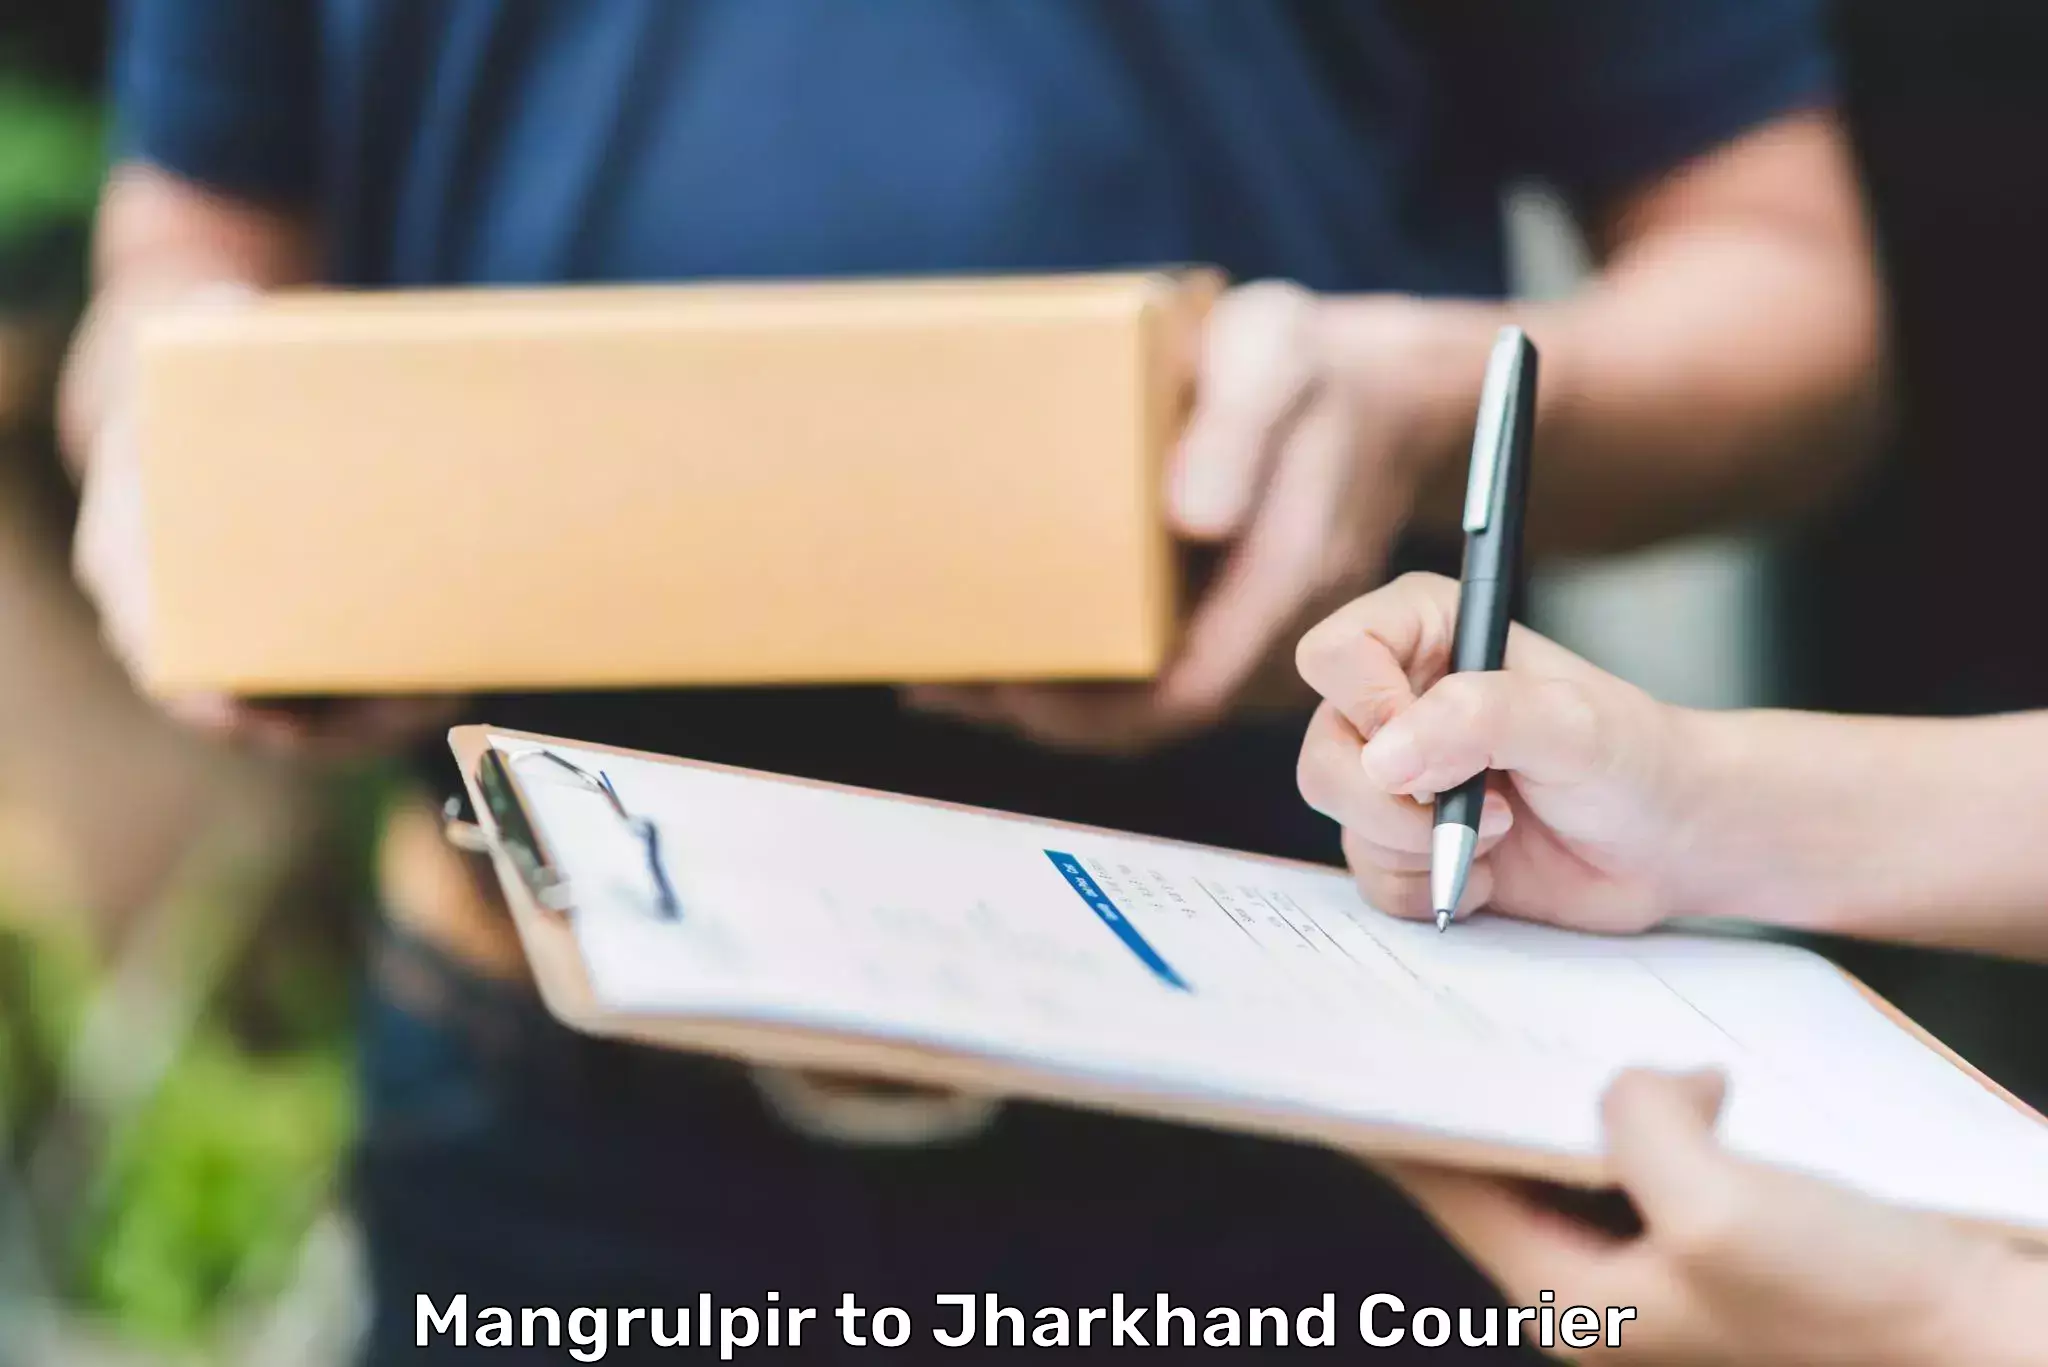 Package delivery network Mangrulpir to Jamshedpur